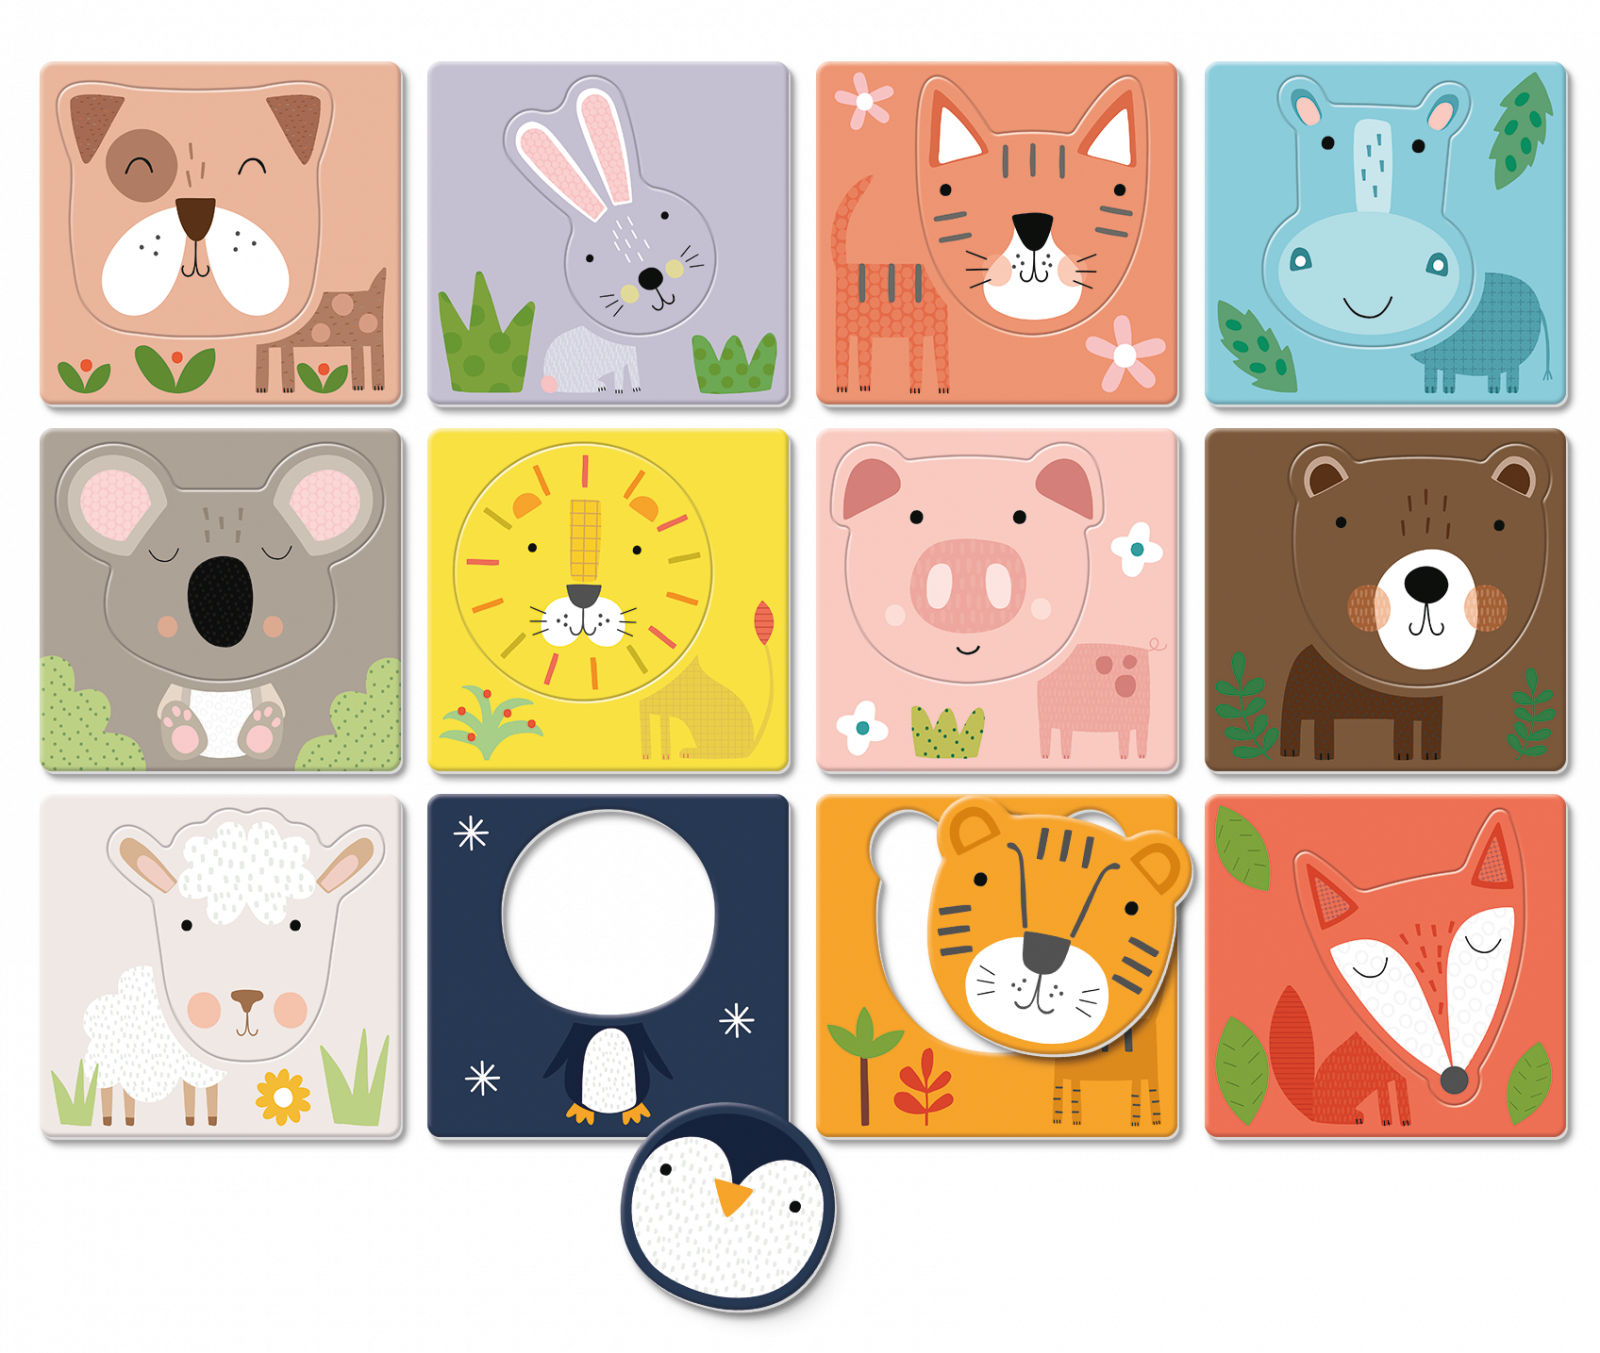 Puzzle educativ - Play Dudu: Little Faces-Shapes and colors | Ludattica